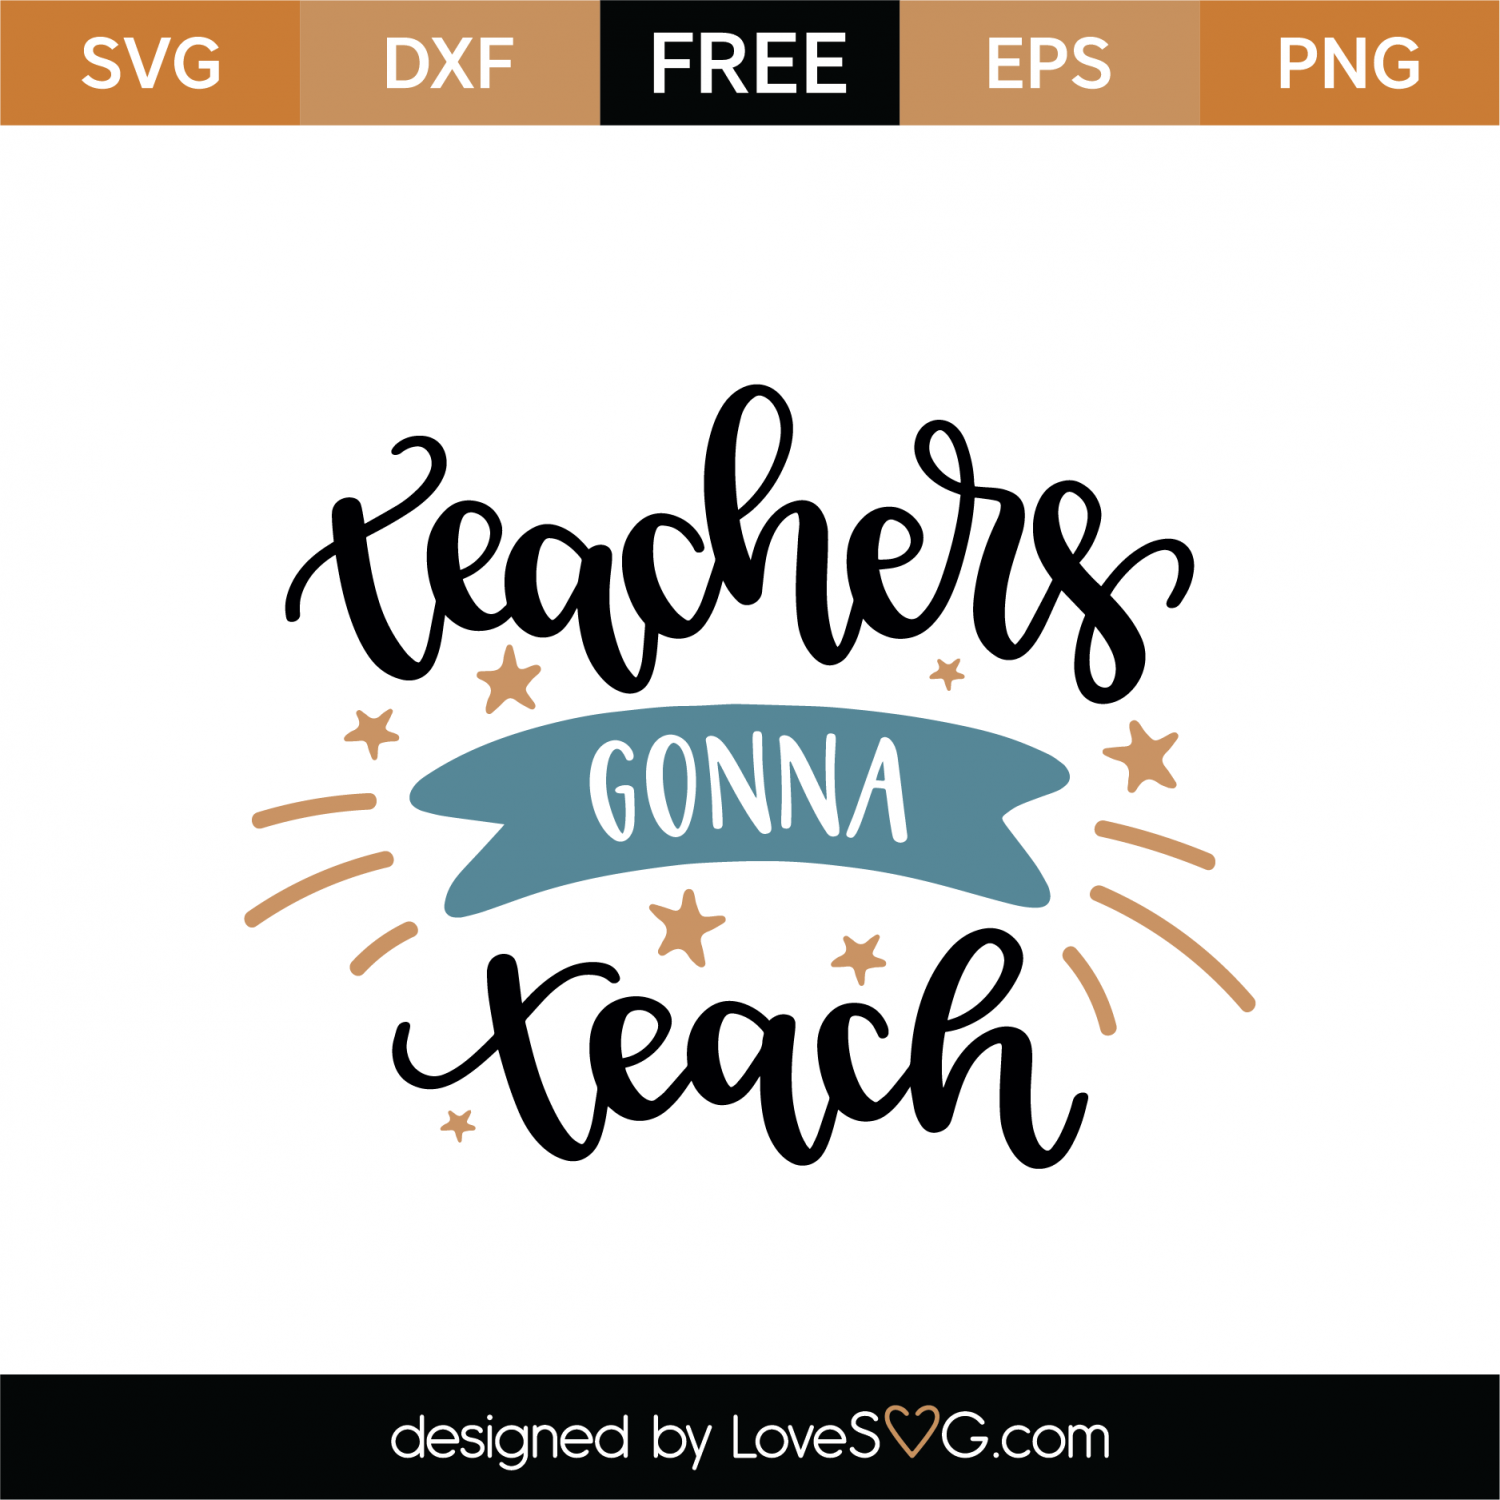 Free Teachers Gonna Teach SVG Cut File | Lovesvg.com